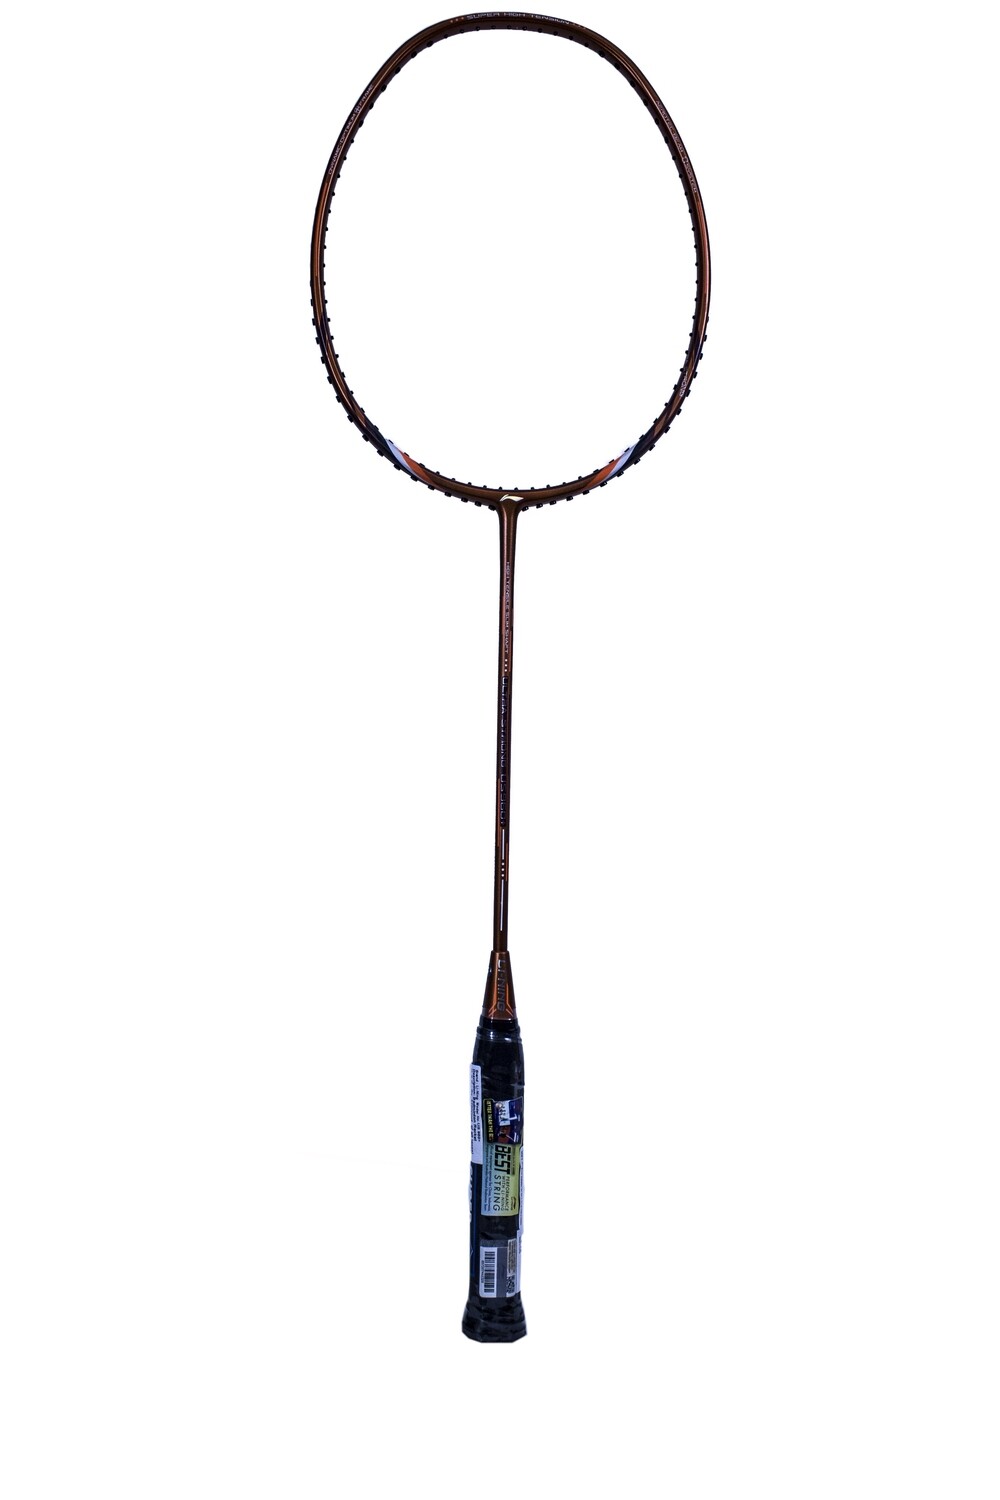 LI-NING Ultra Strong US 960+ Badminton Racquet -